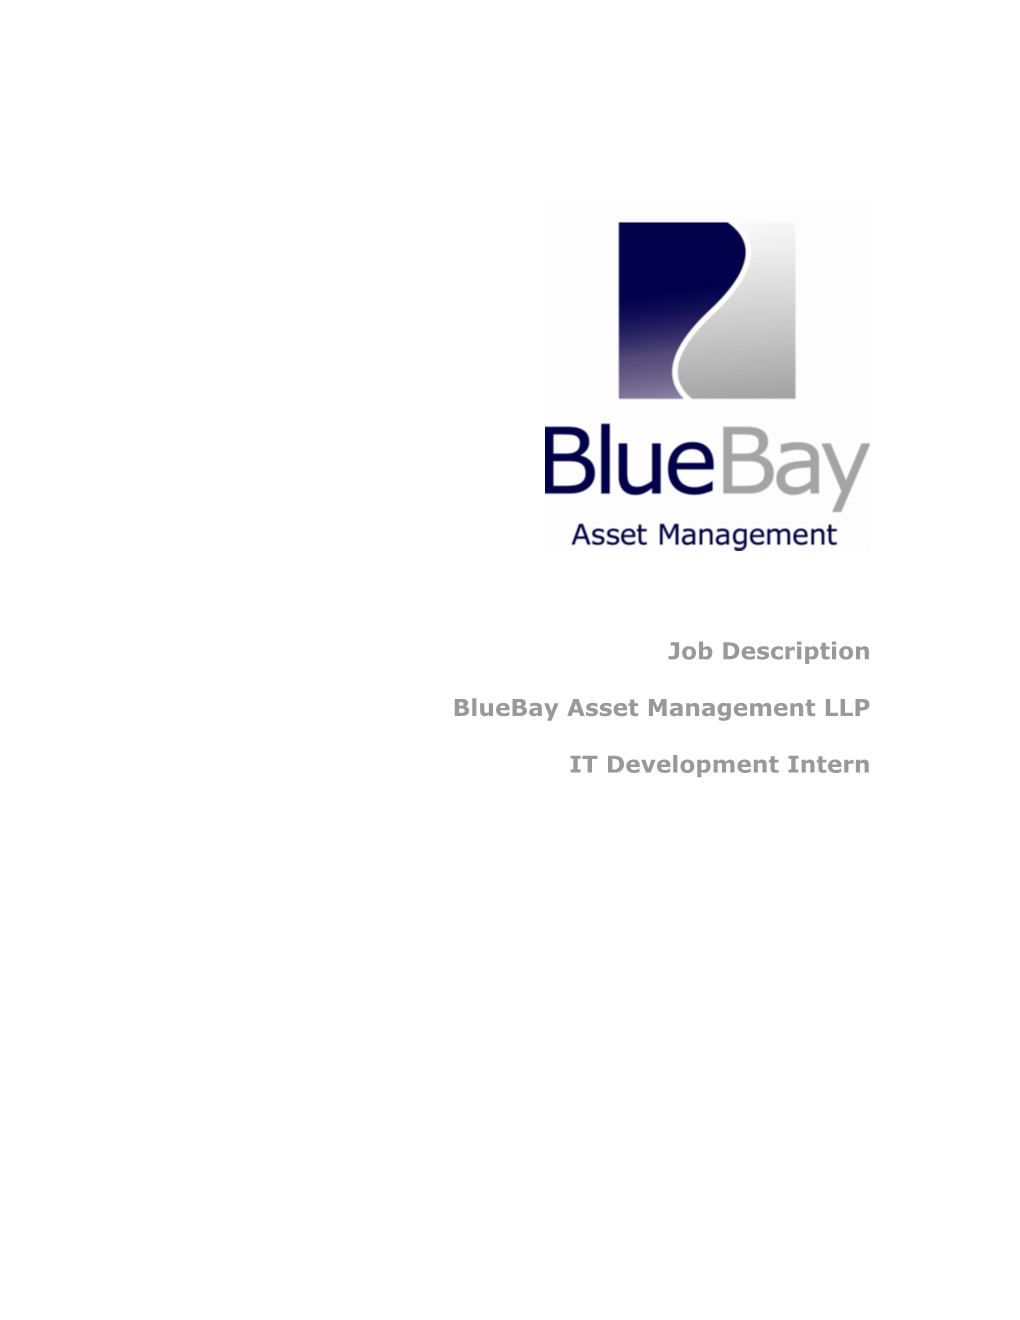 Bluebay Asset Management Ltd